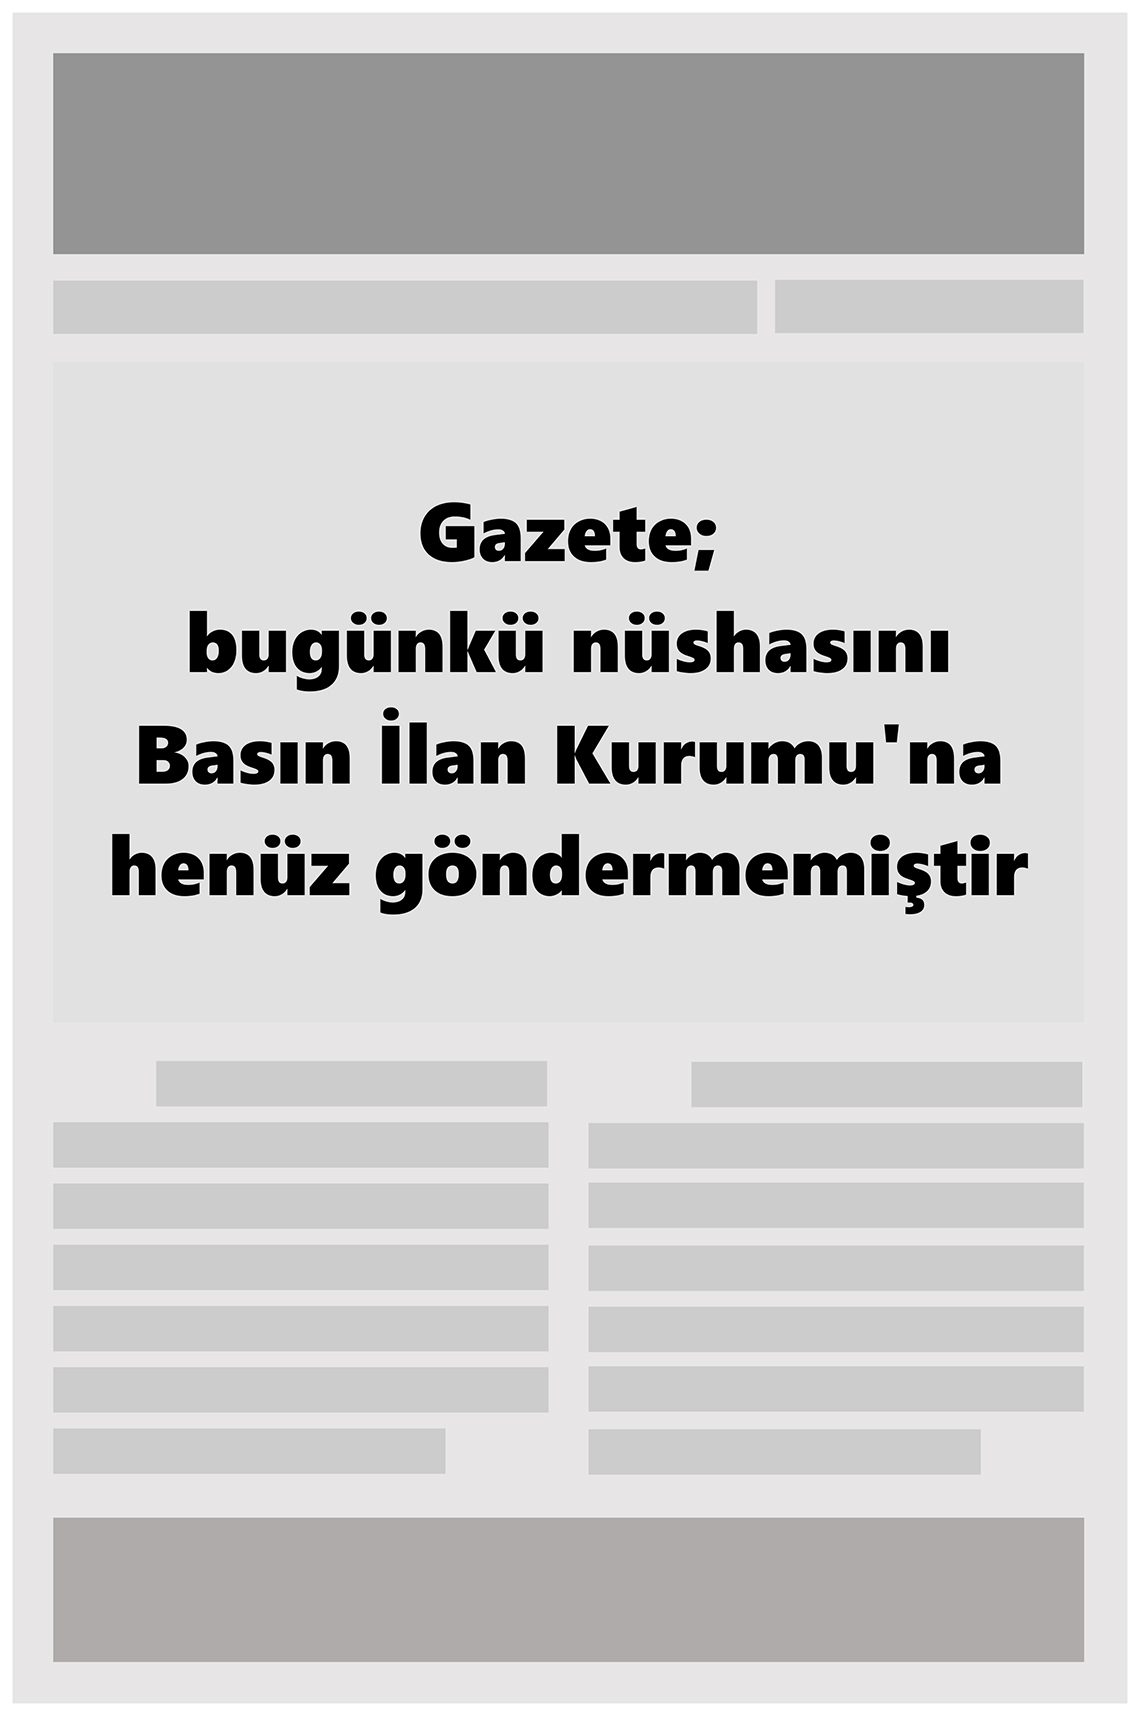 14 Ağustos 2022 Balıkesir Politika Gazete Manşeti